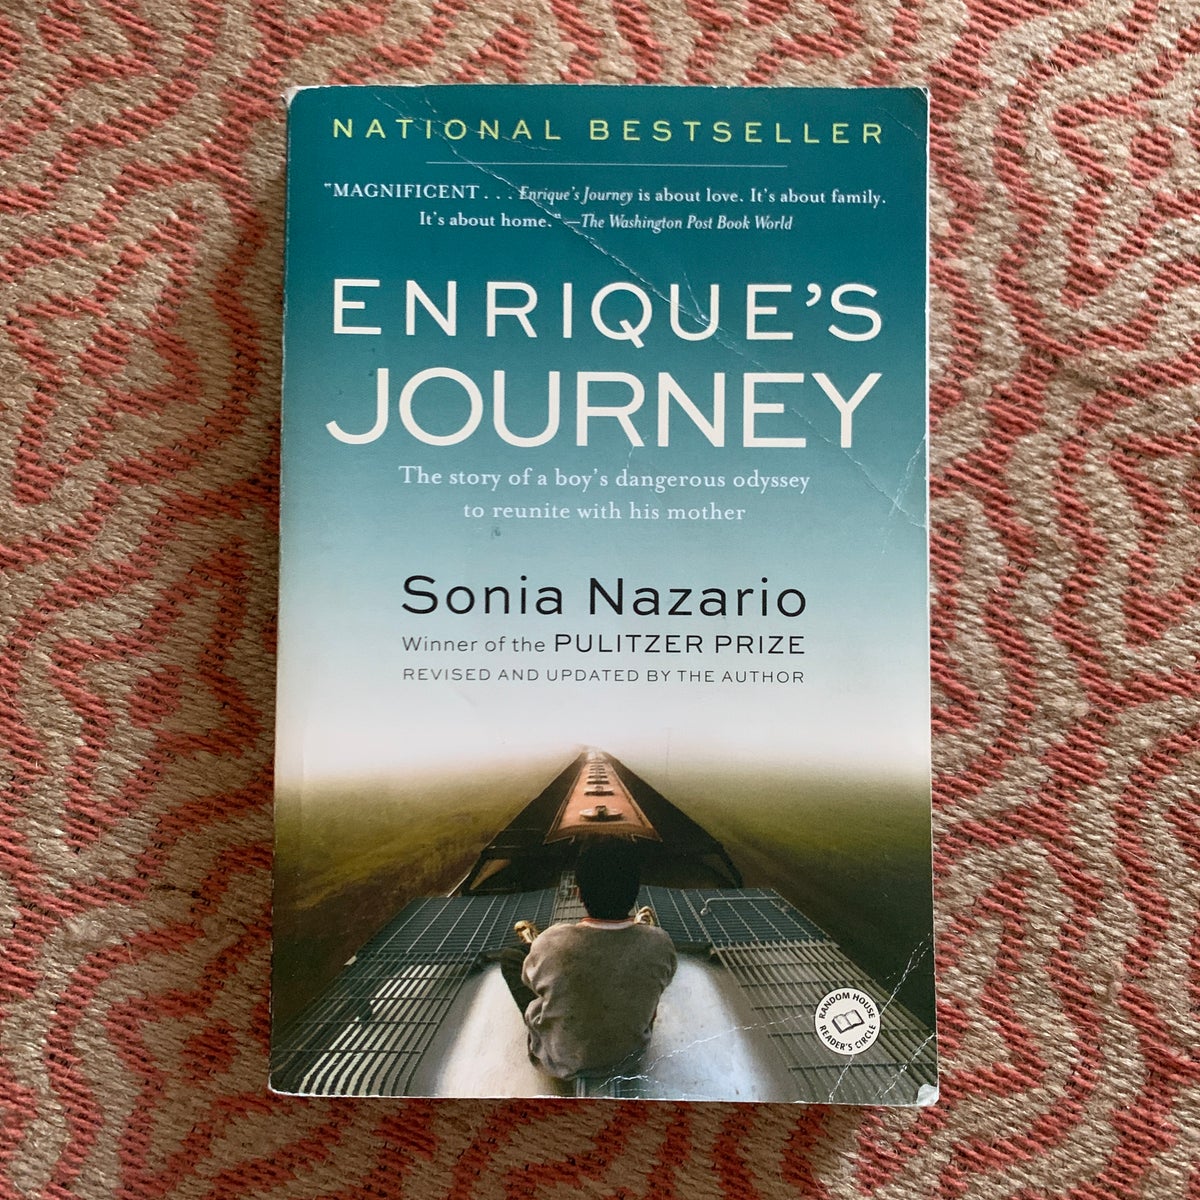 enrique's journey by sonia nazario audiobook